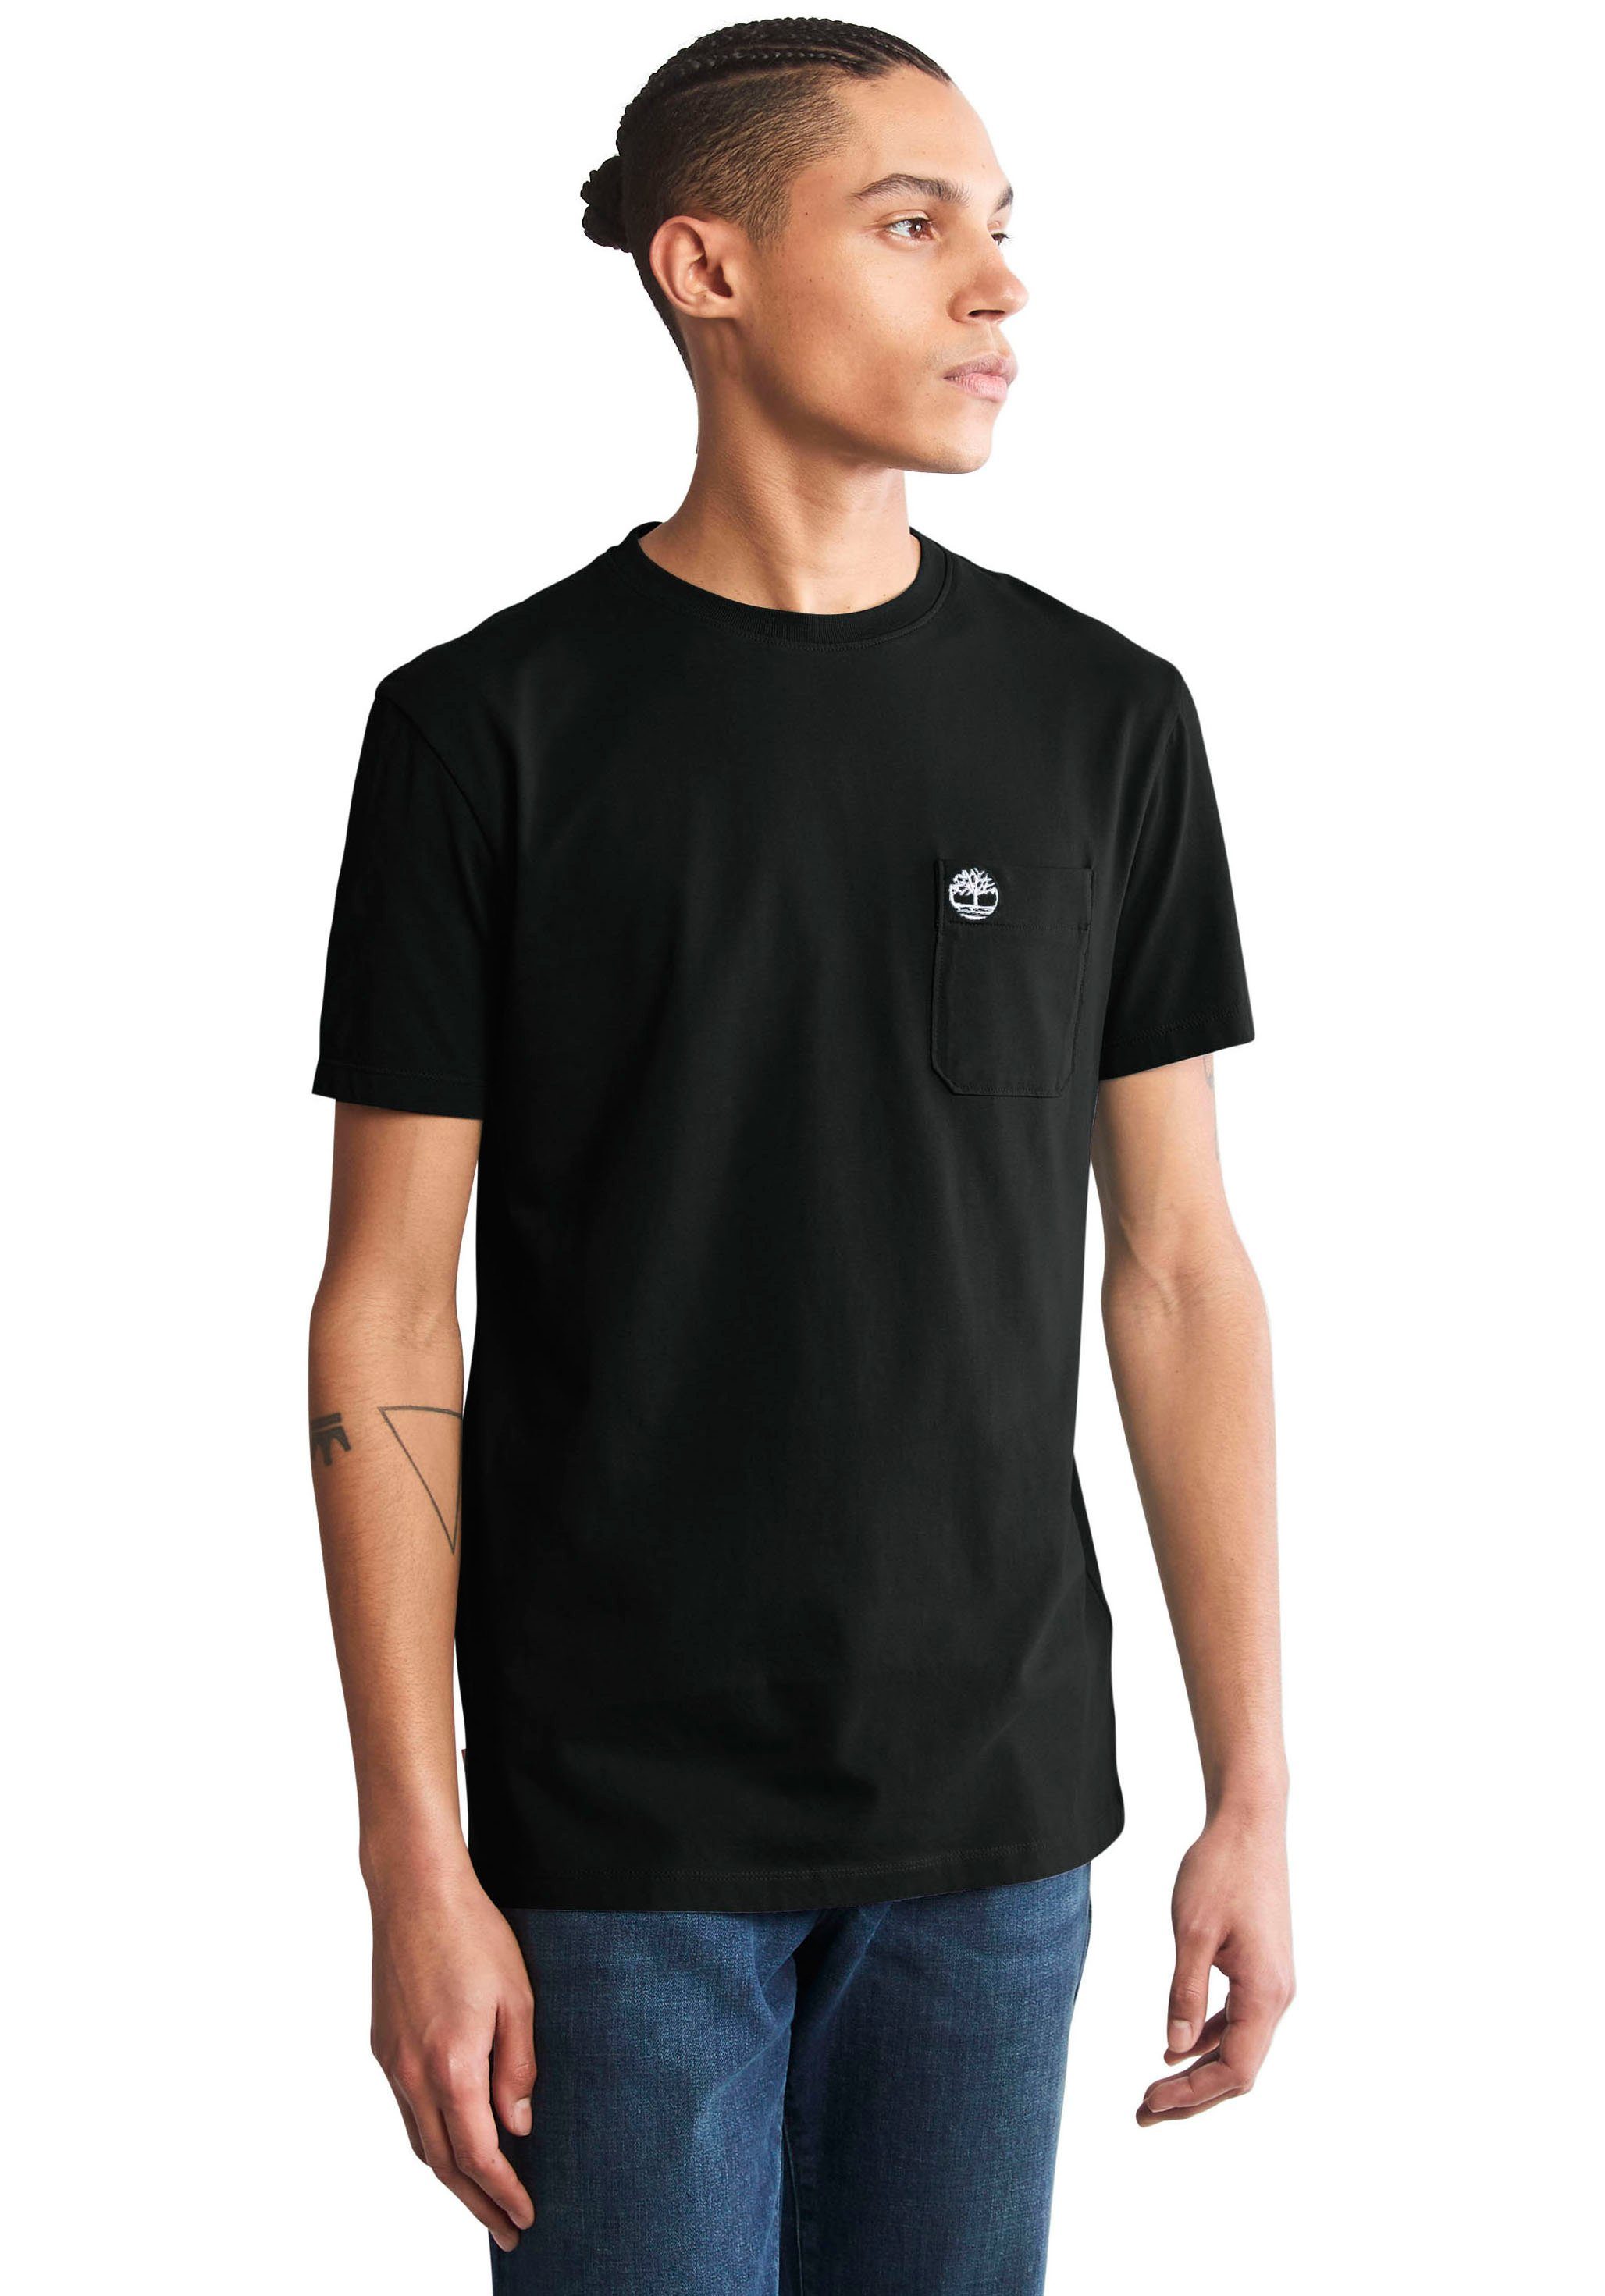 black DUNSTAN RIVER POCKET TEE Timberland T-Shirt